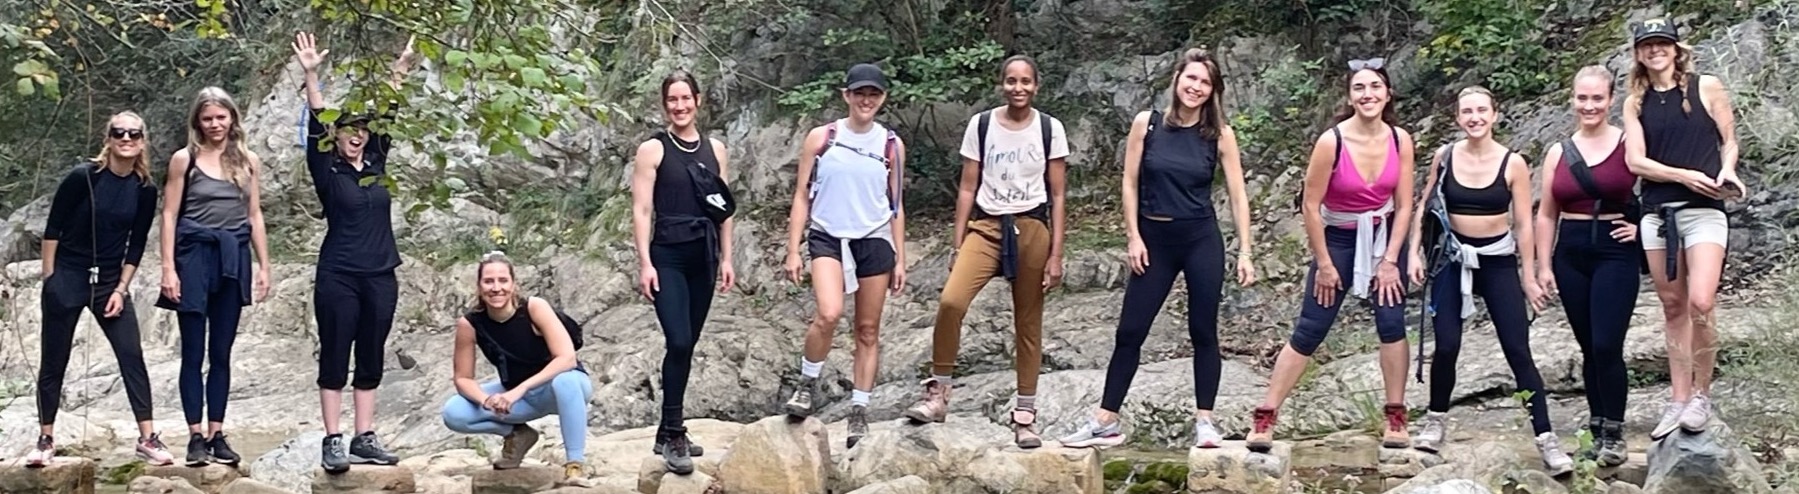 NUSHU Mastermind Group Hiking in Spain